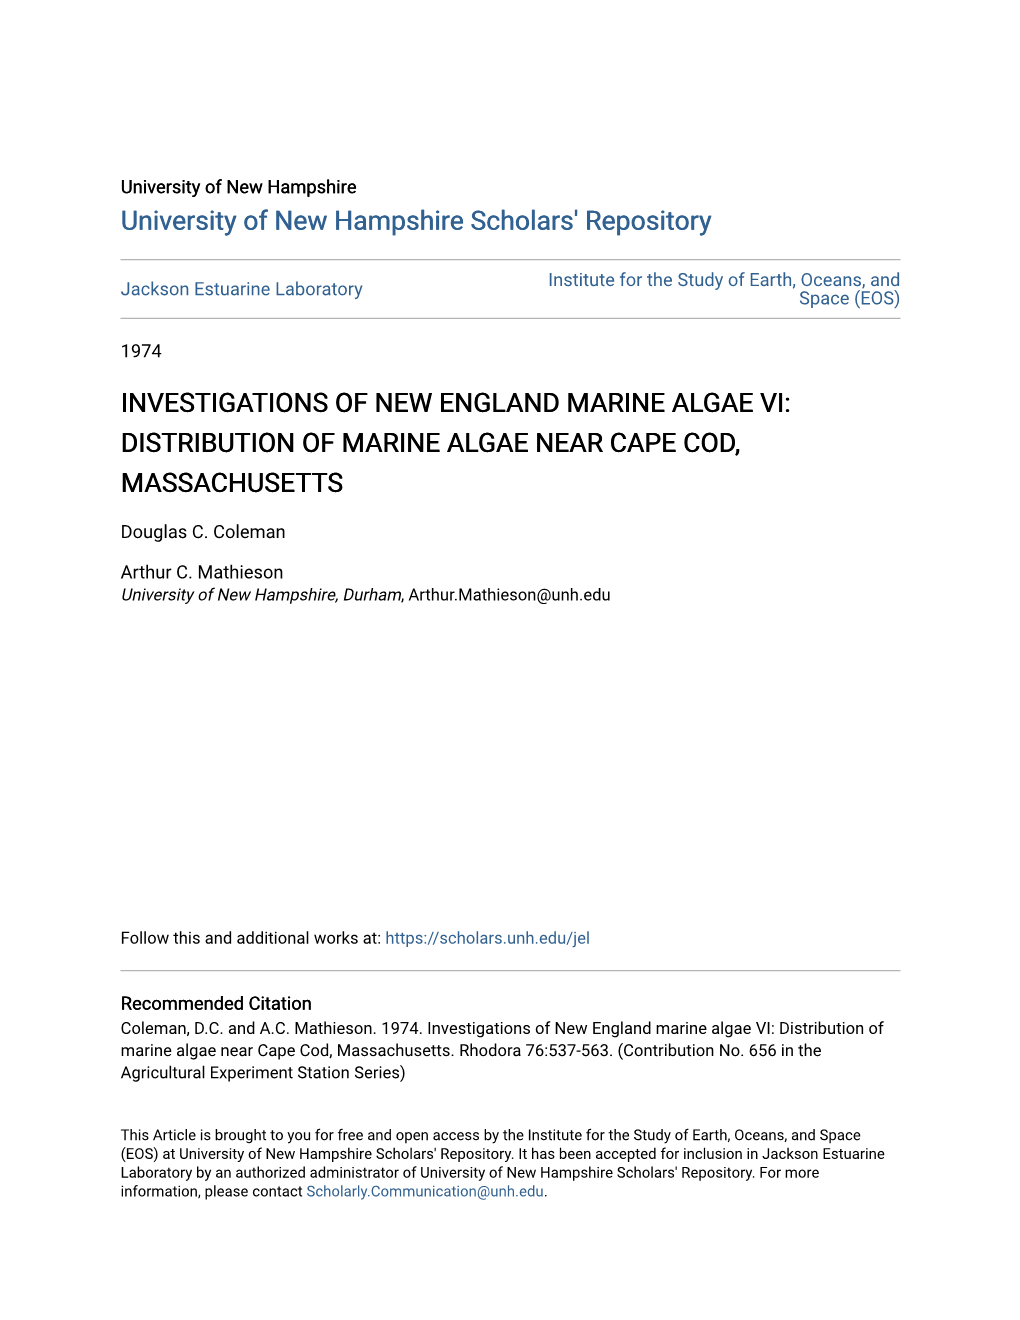 Investigations of New England Marine Algae Vi: Distribution of Marine Algae Near Cape Cod, Massachusetts